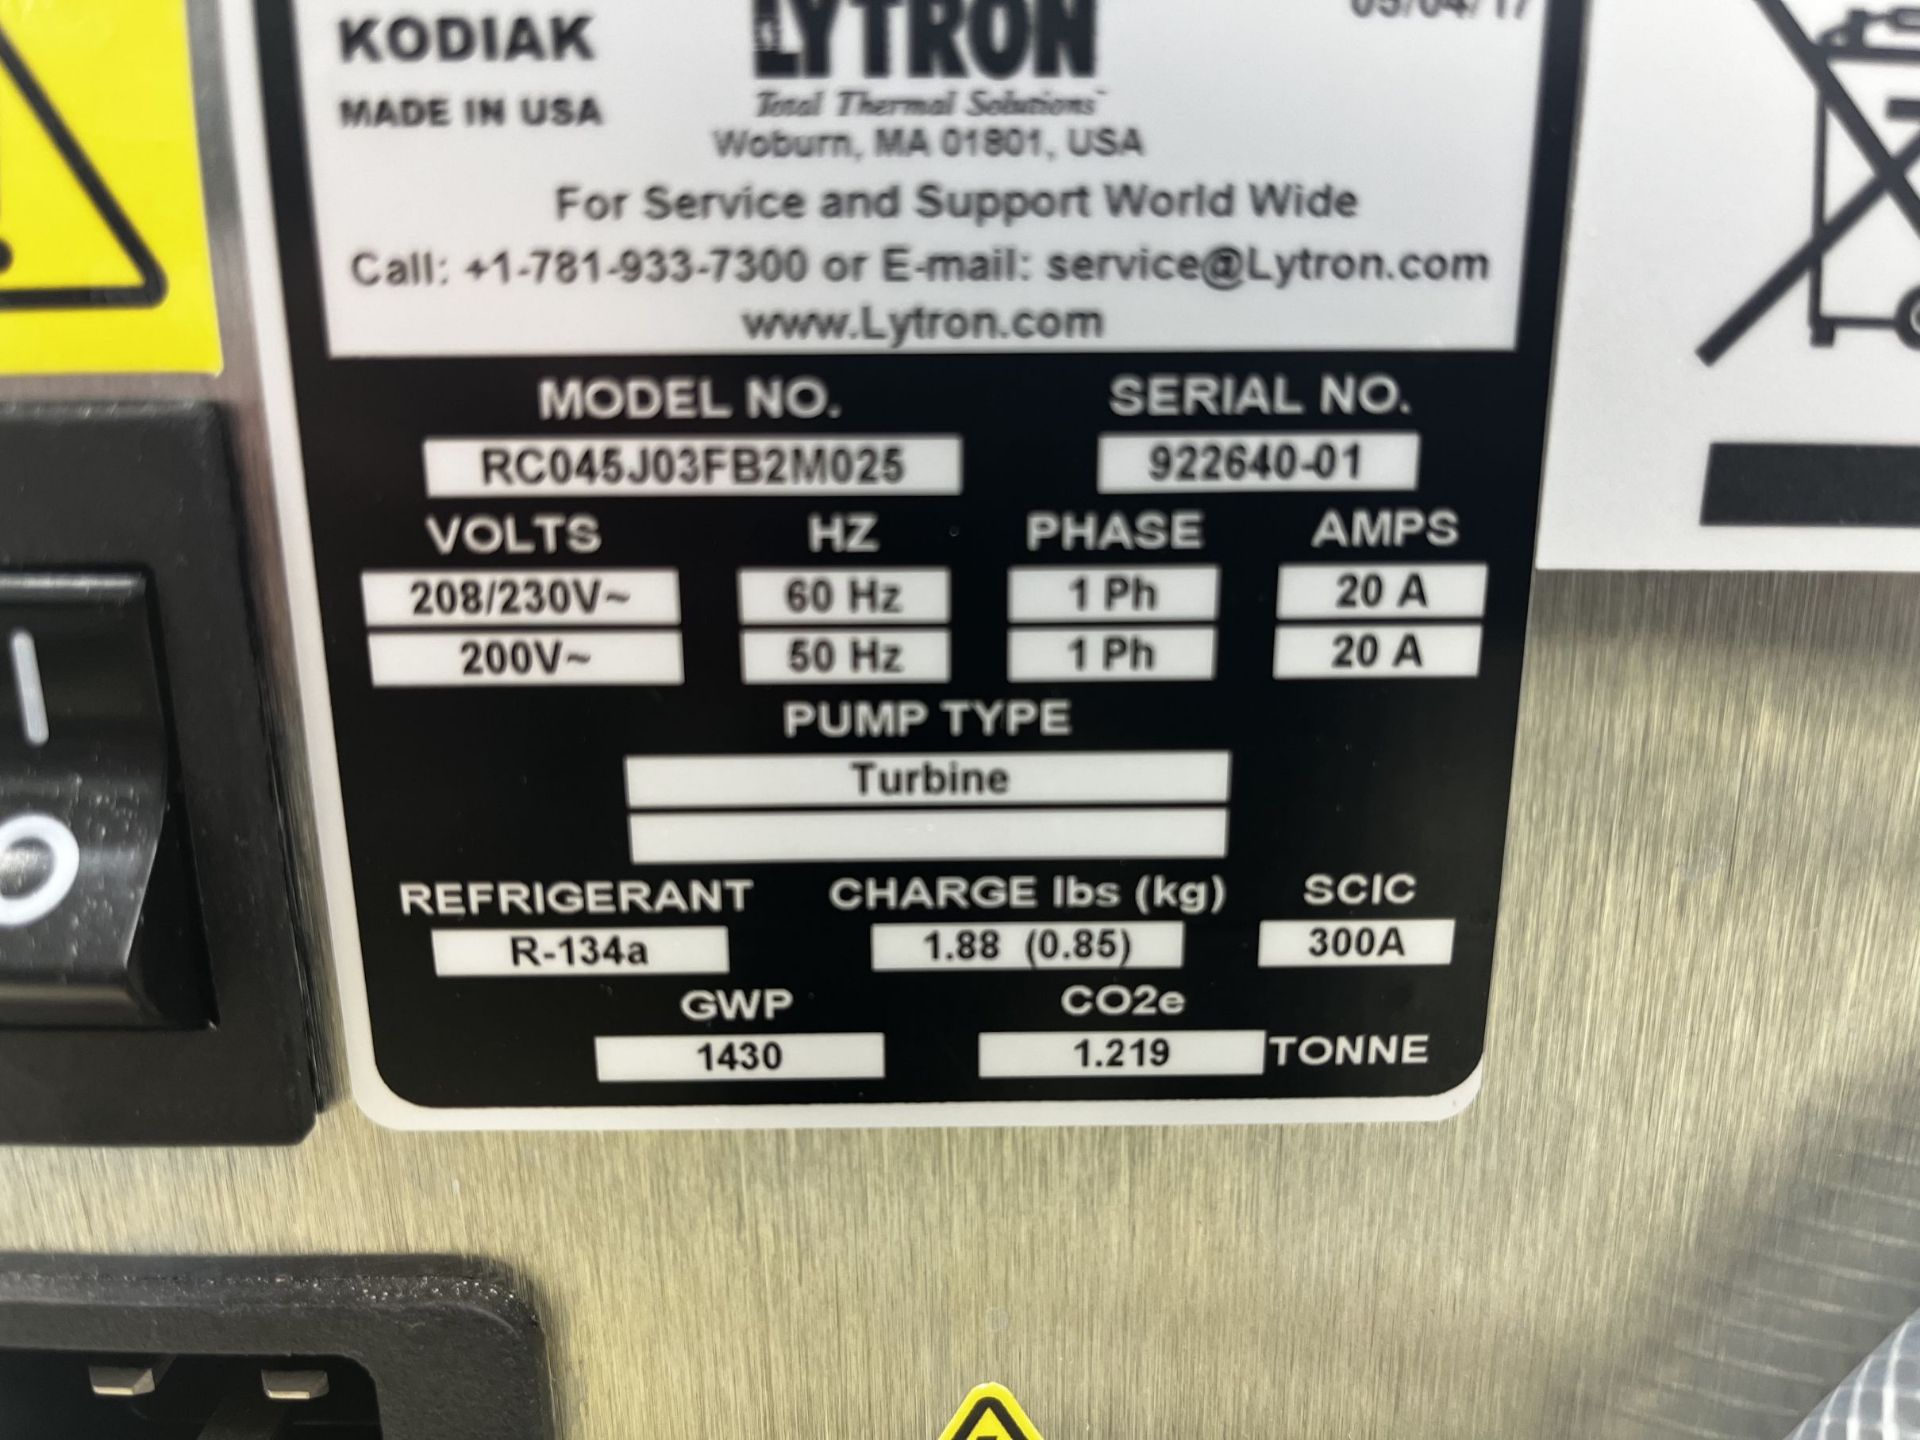 Lytron Kodiak Recirculating Chiller mod: RC045J03FB2M025 - Image 6 of 8